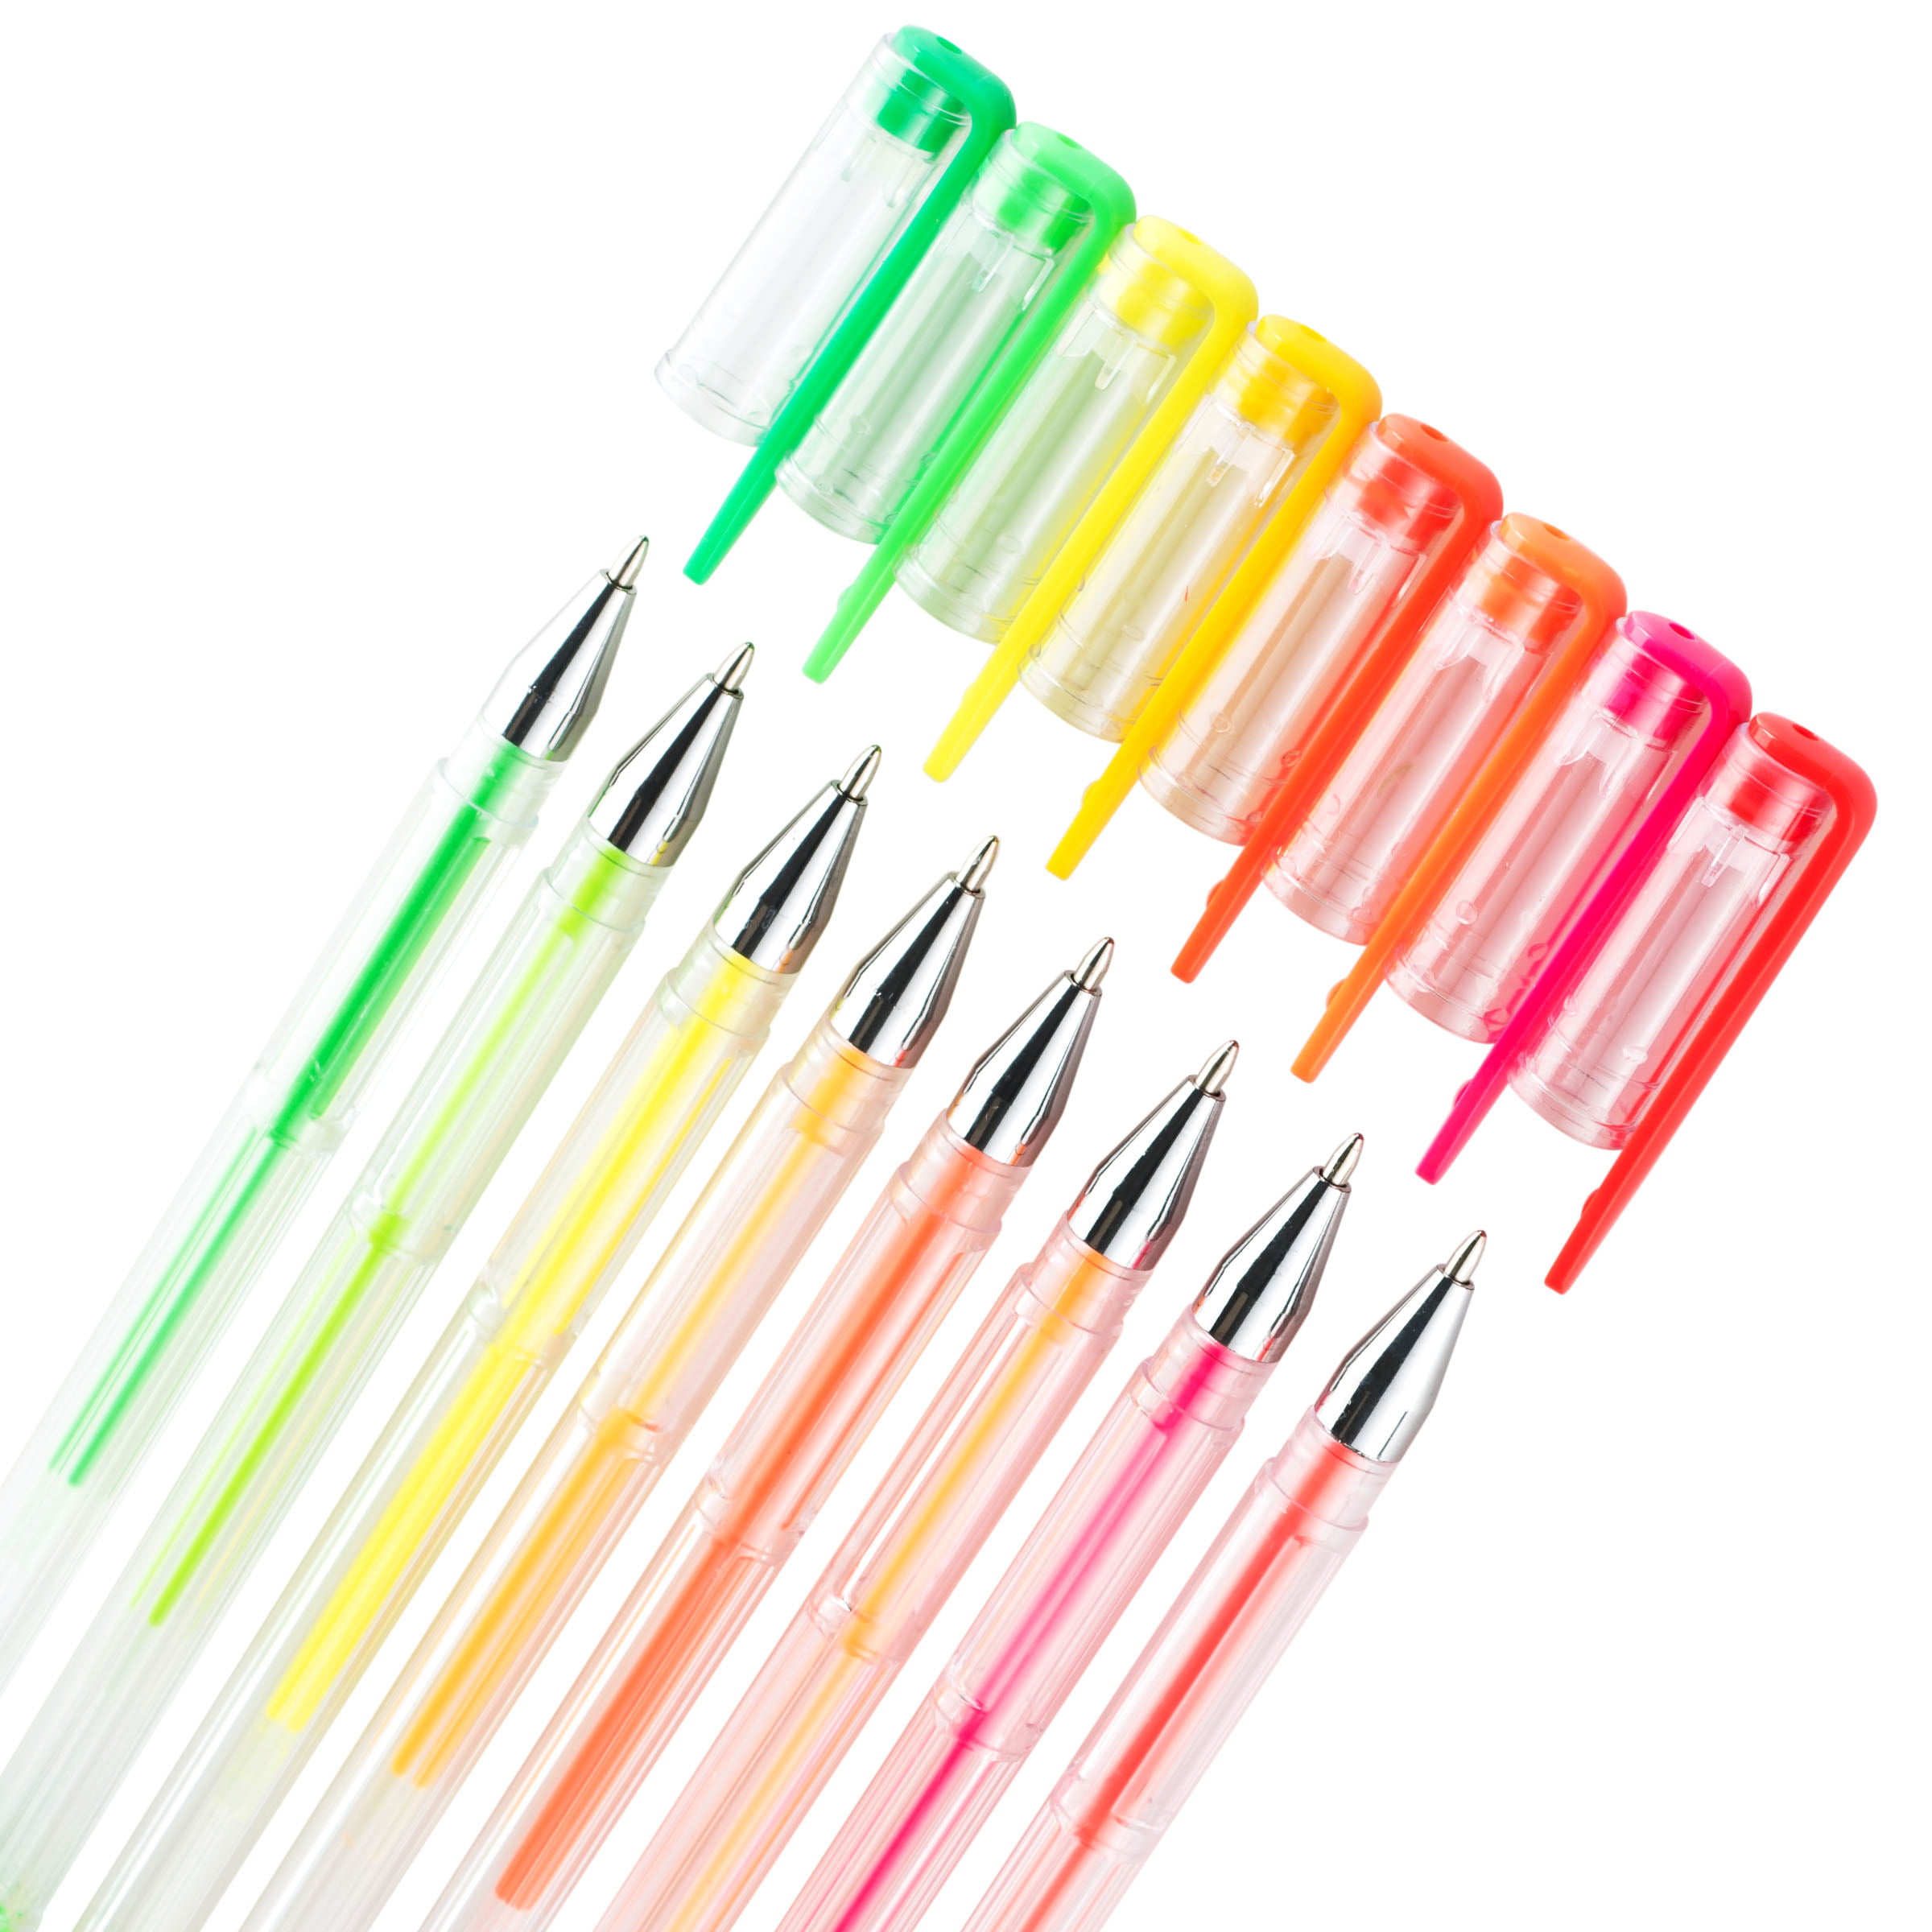 Gel Pens for Adult Coloring Books, 160 Pack Artist Colored Gel Pen wit —  CHIMIYA